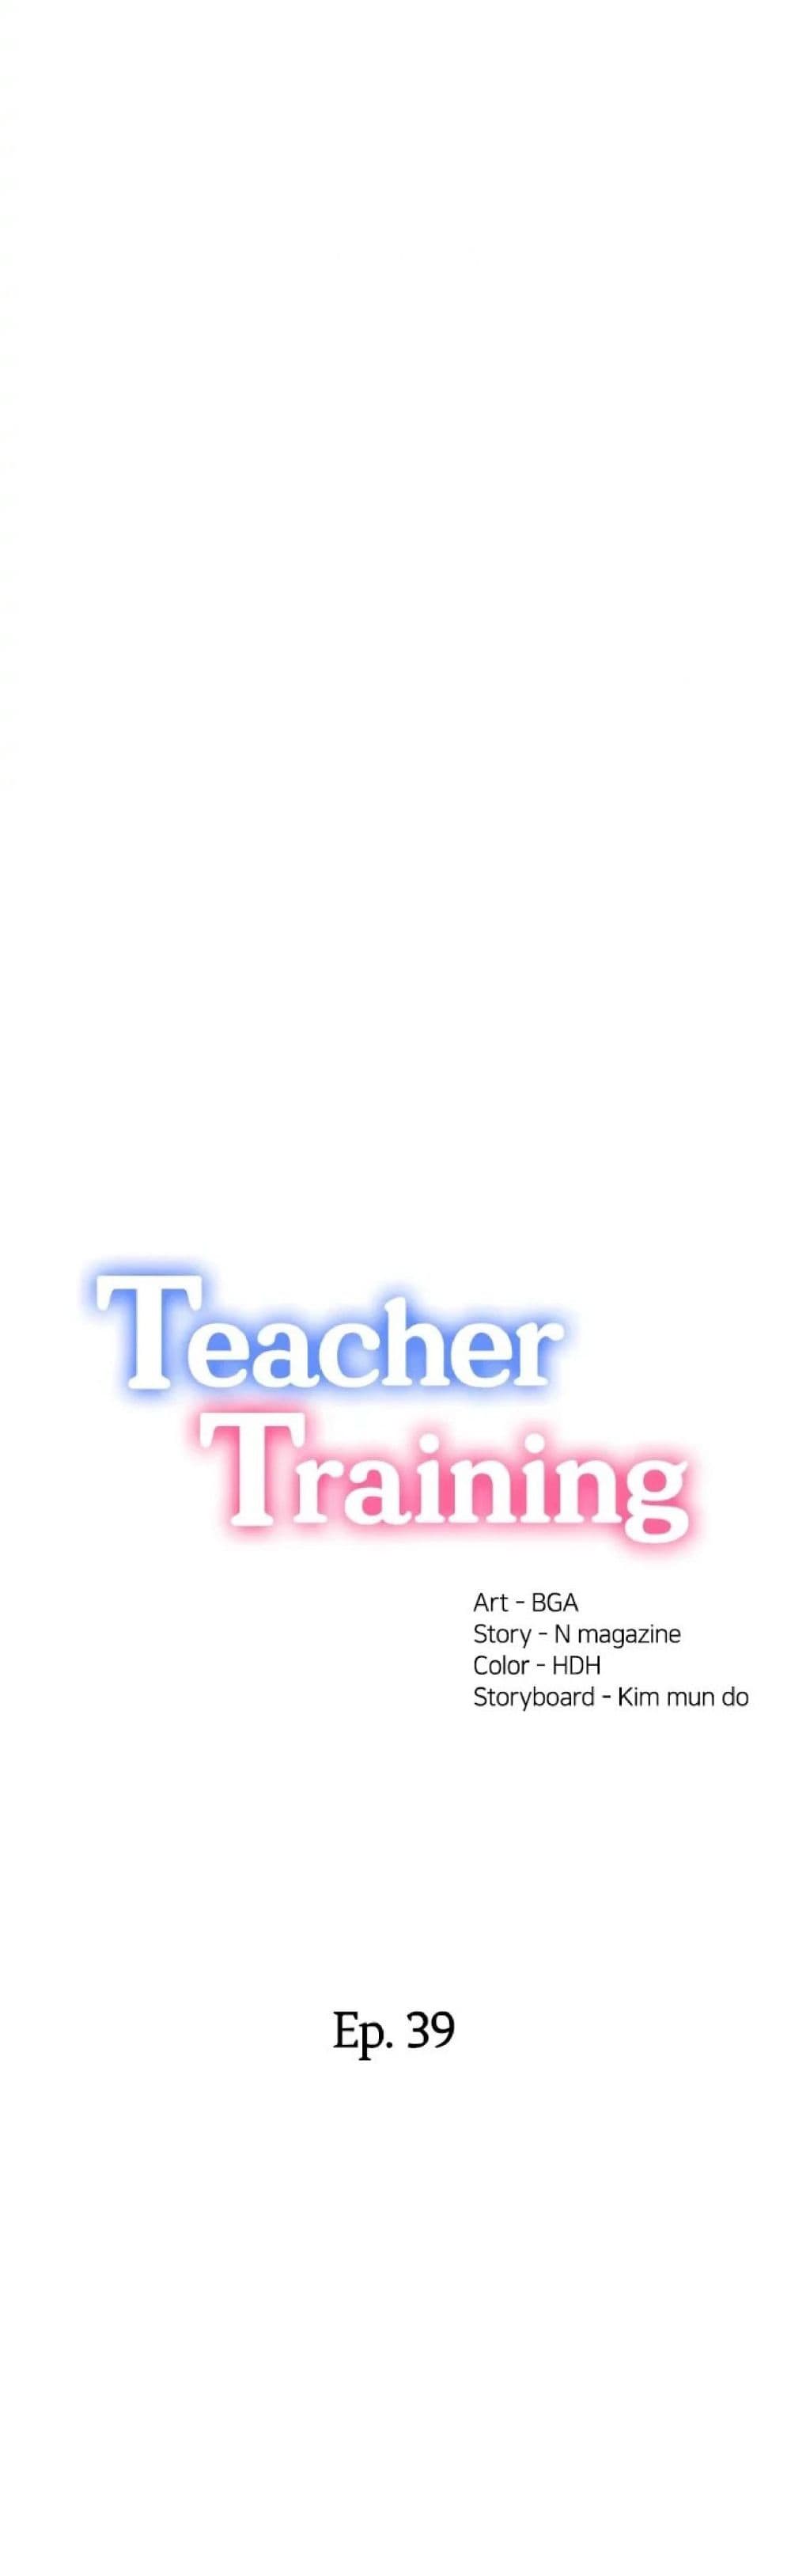 Teaching Practice 39-39